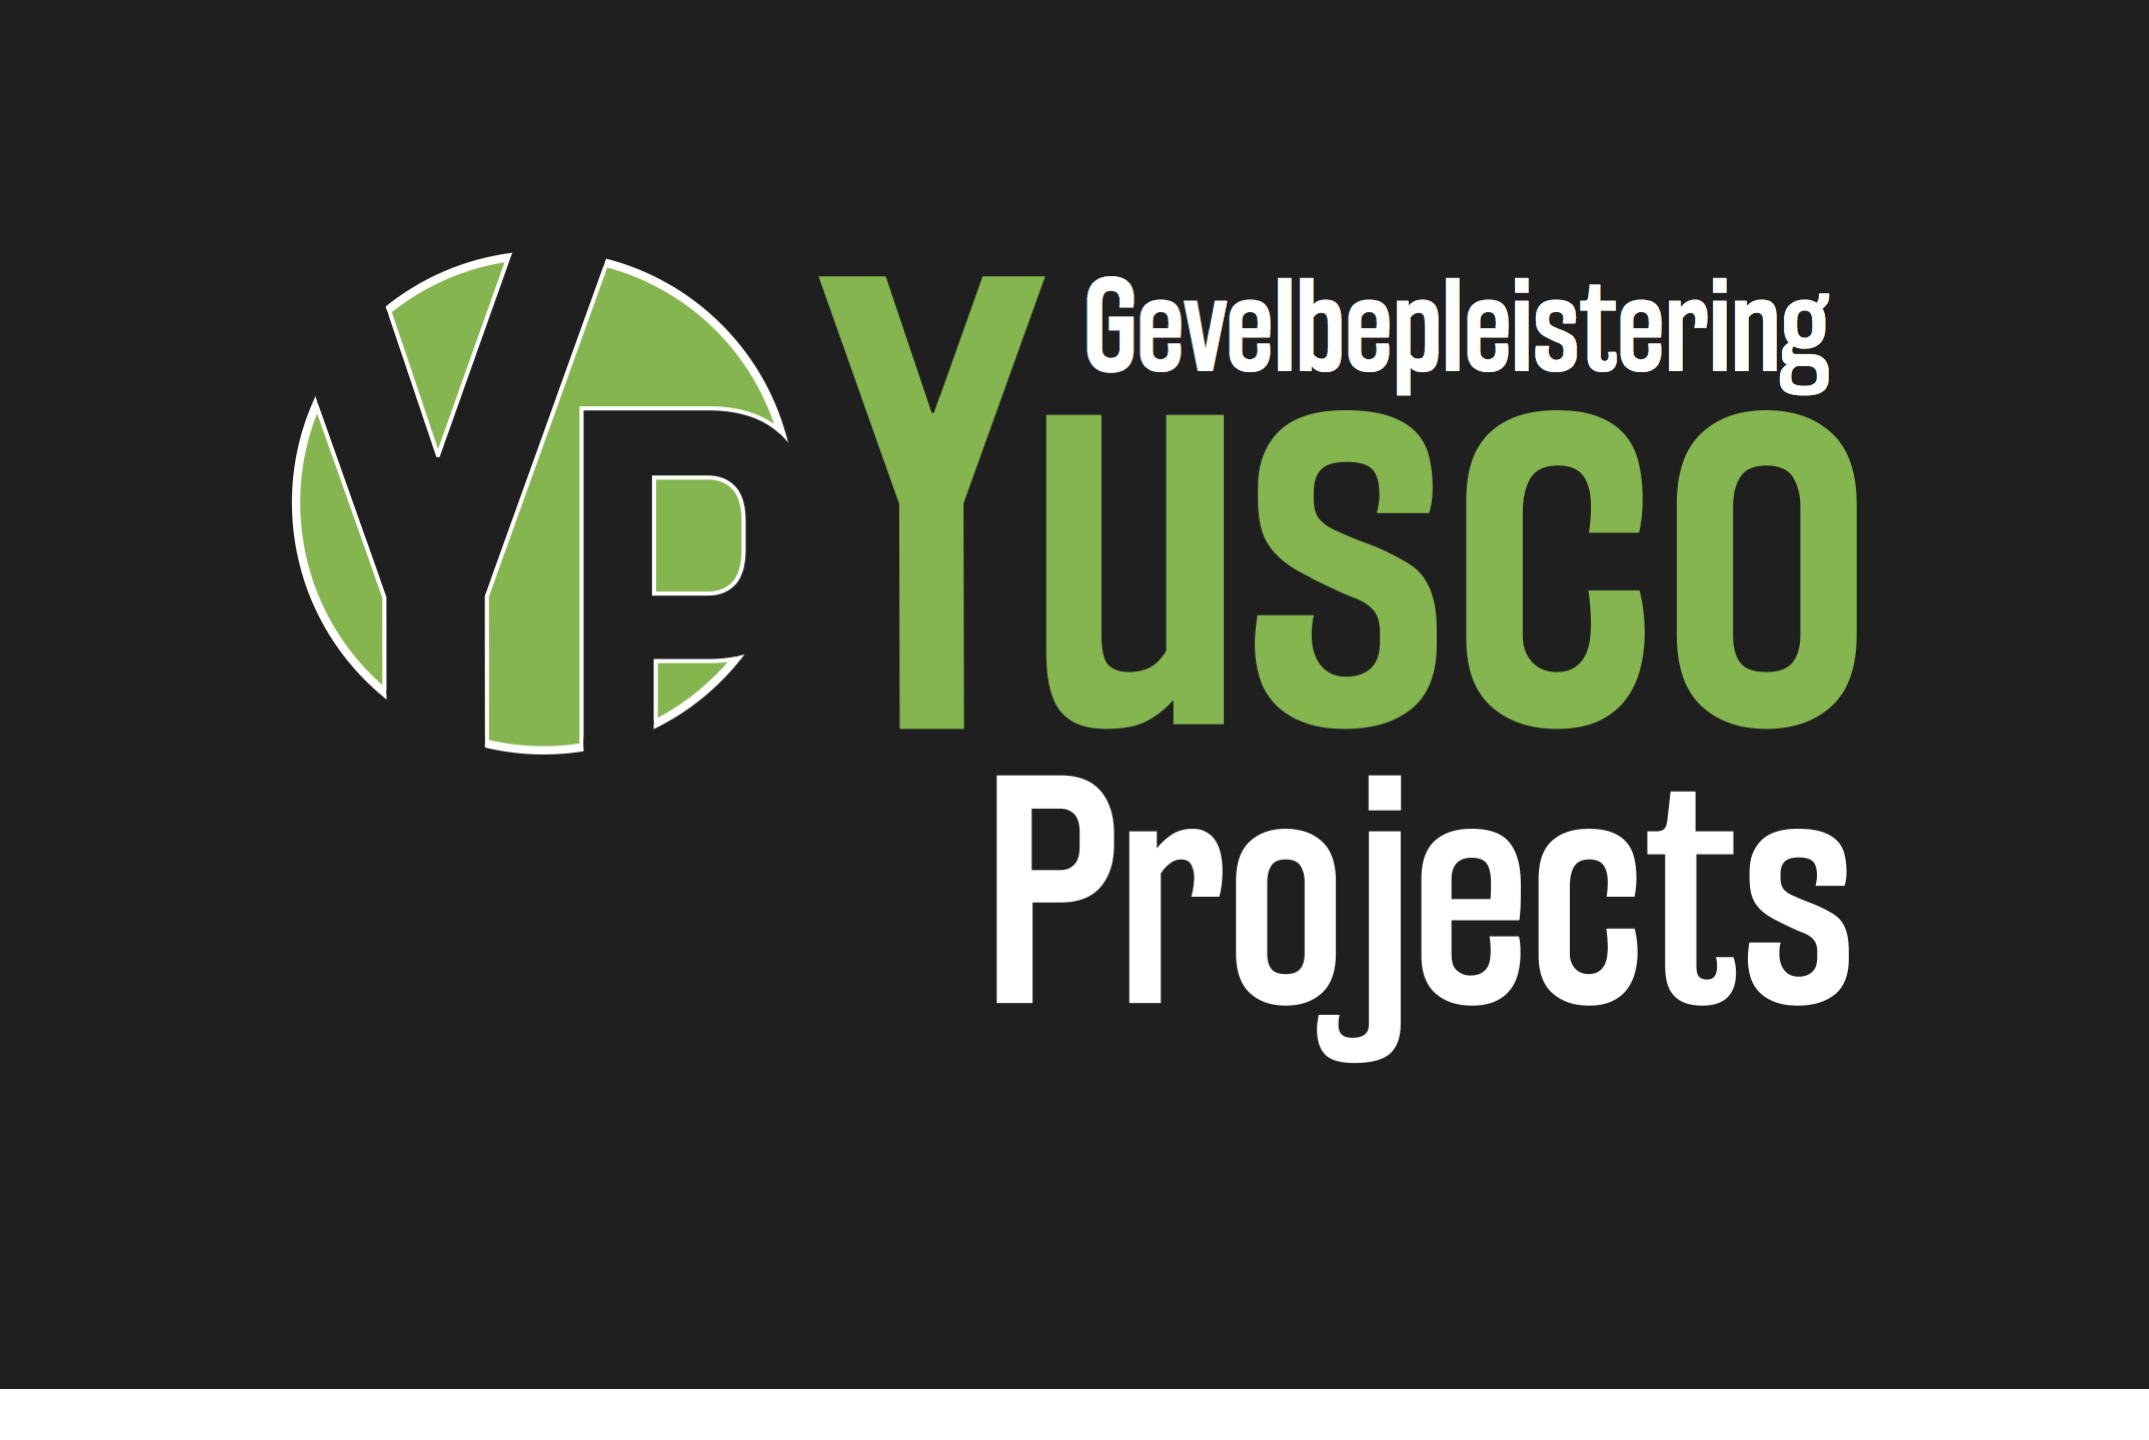 gevelrenovateurs Melle Yusco Projects Gevelbepleistering